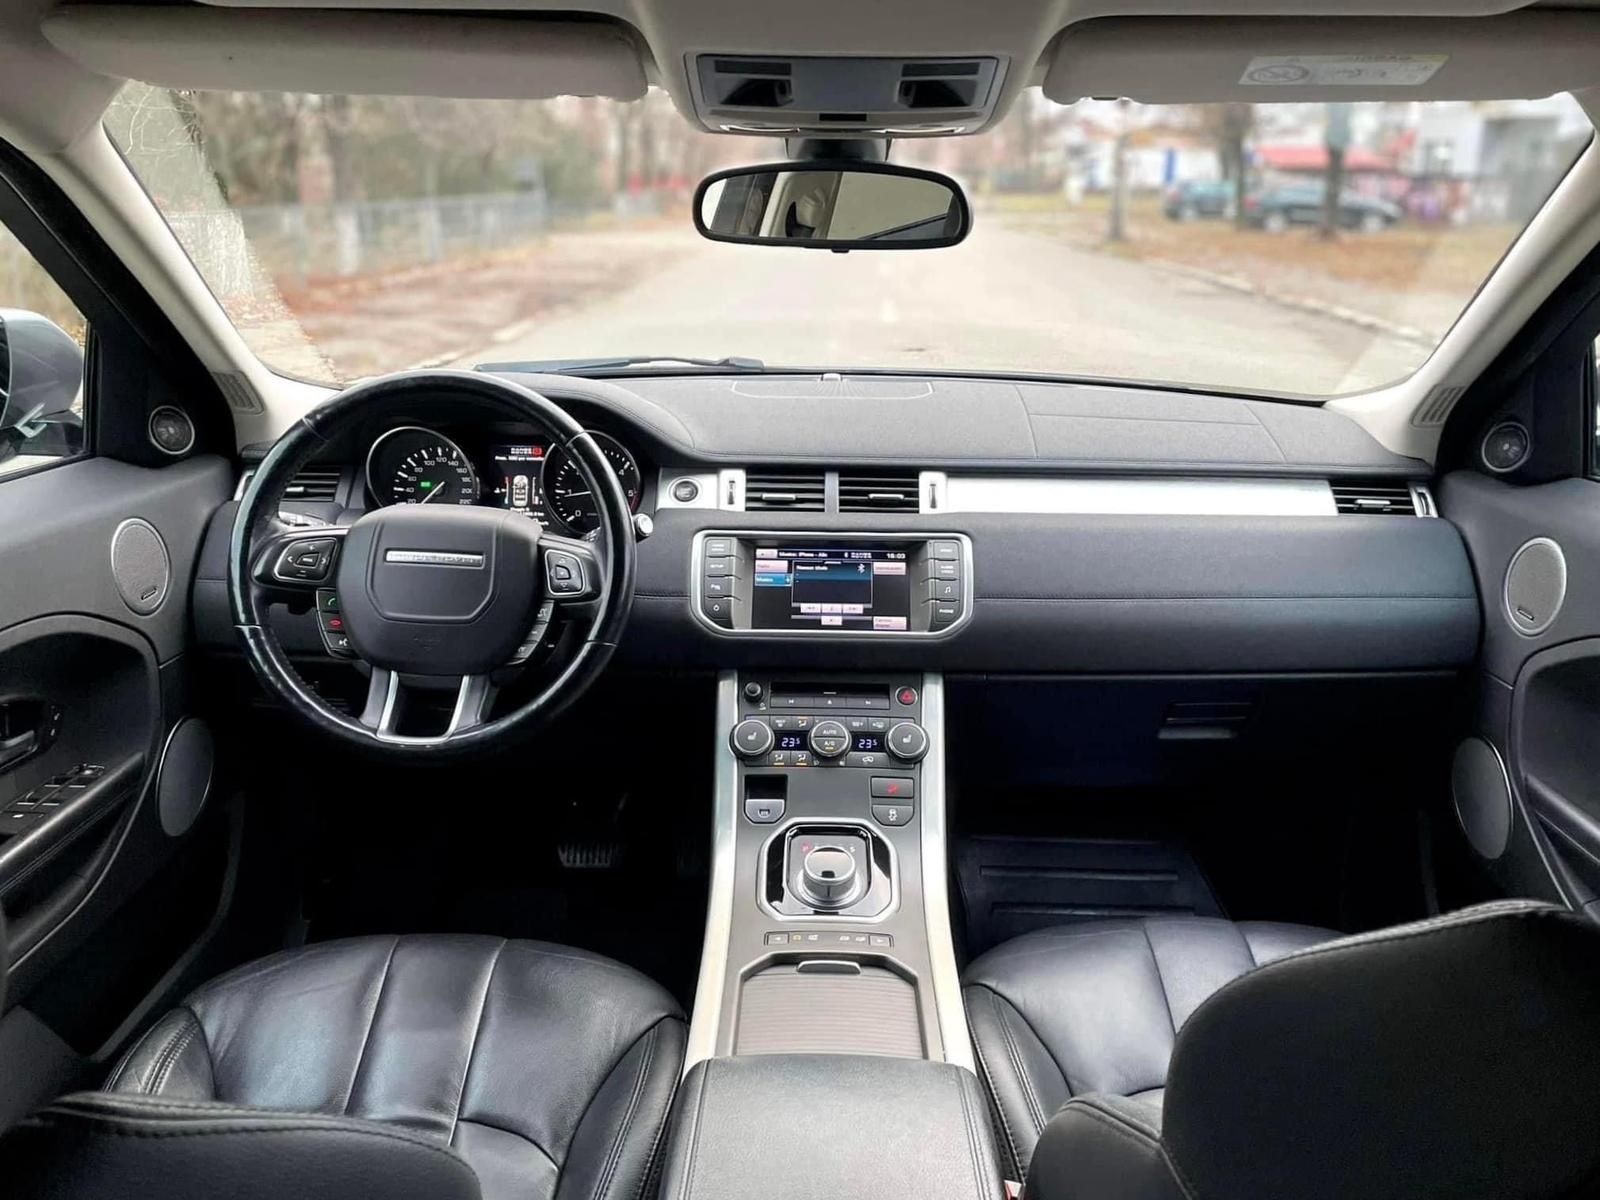 Range Rover Evogue, automat, 190 cp,4x4, impecabil, 140000 km